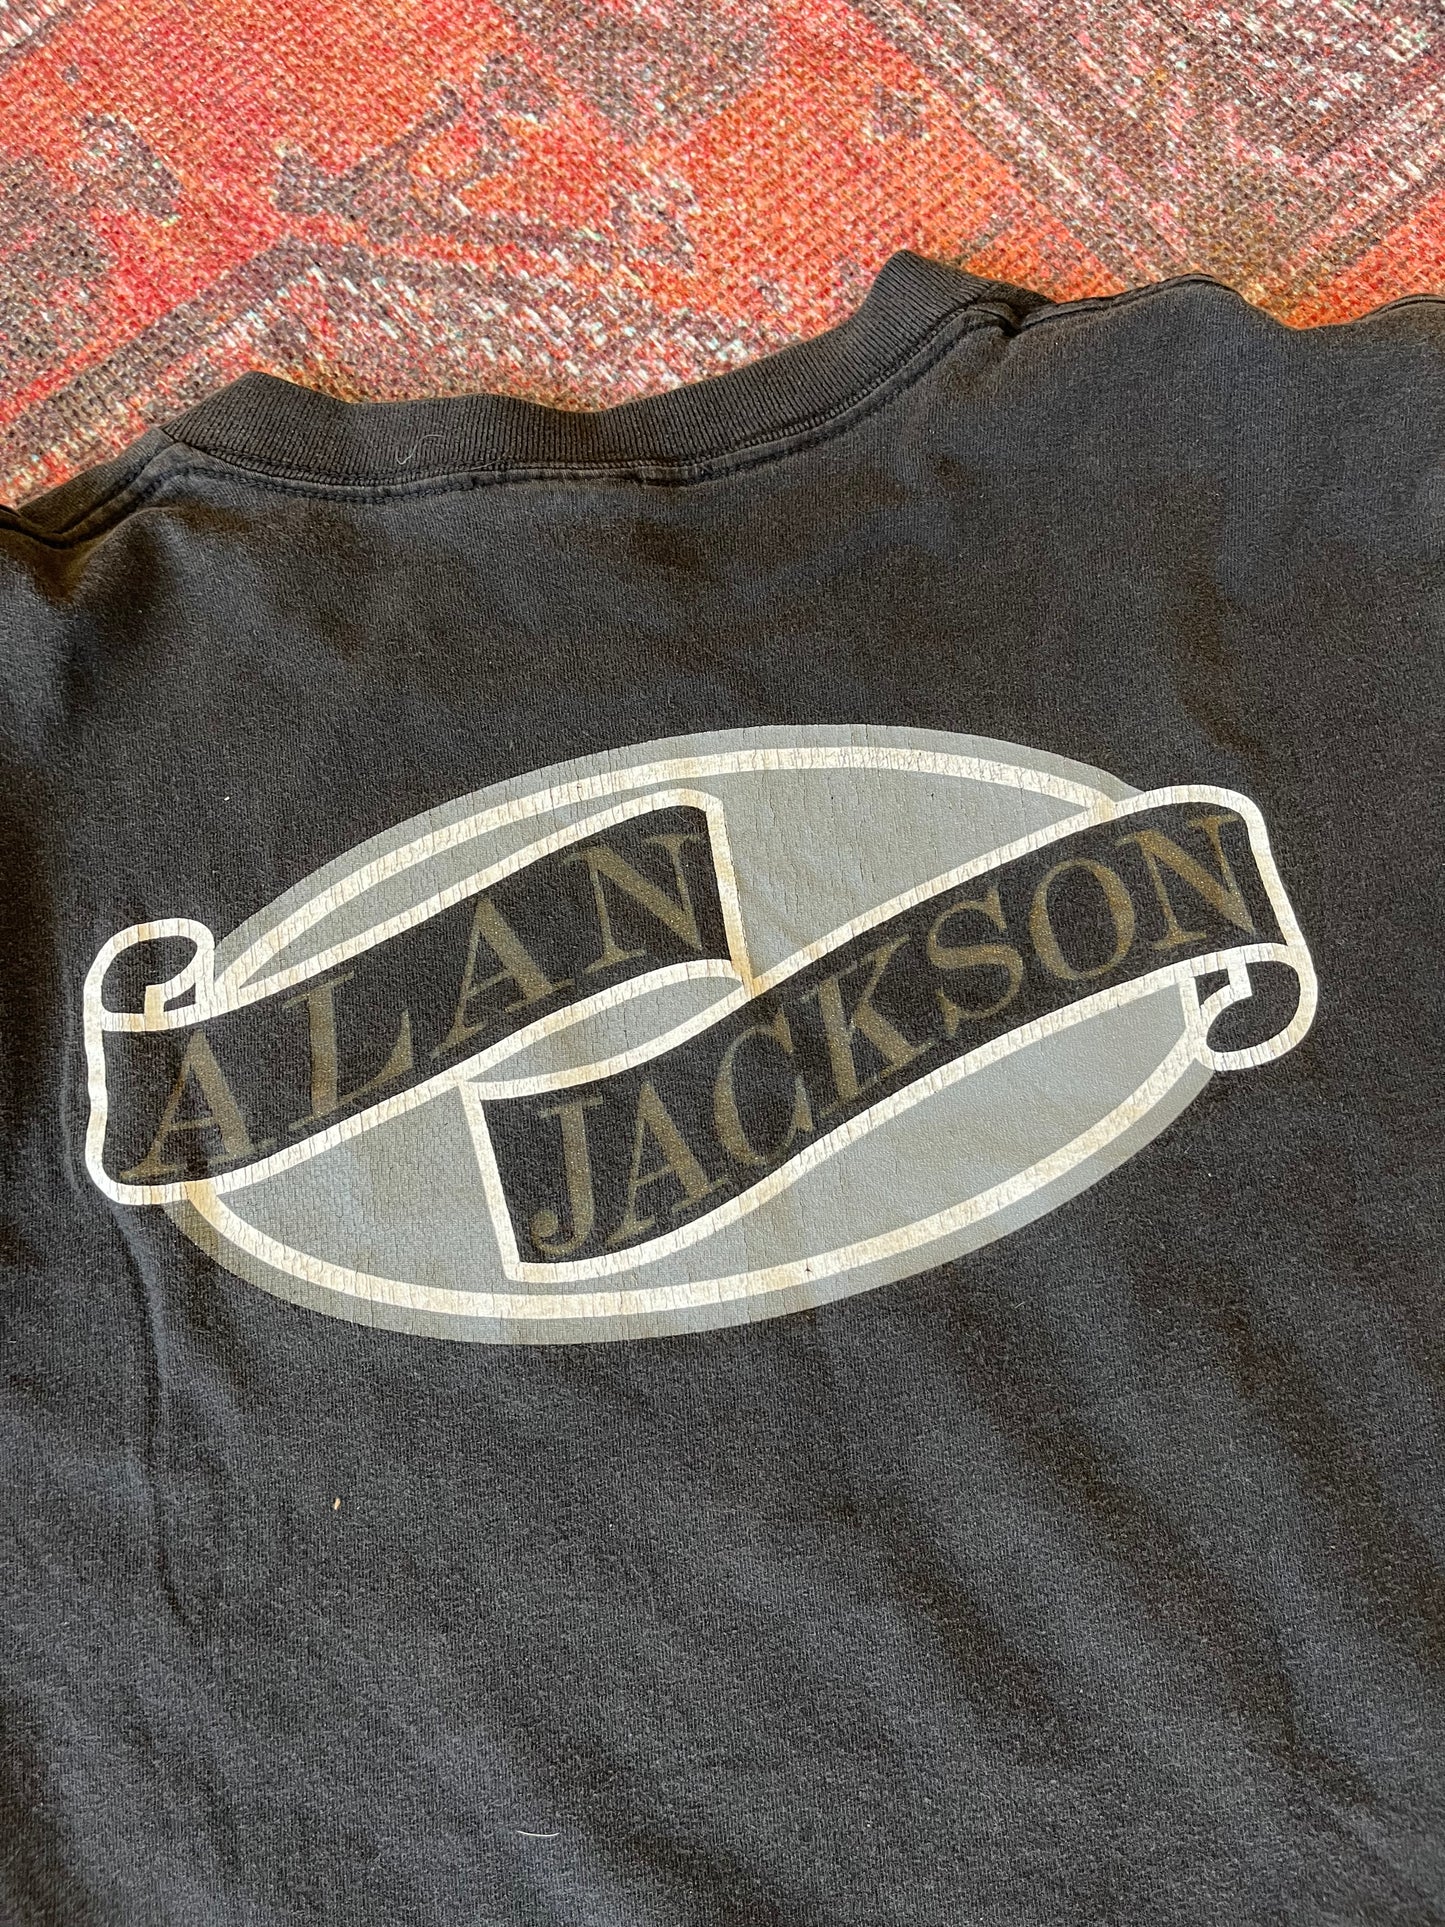 Alan Jackson biker vintage tshirt